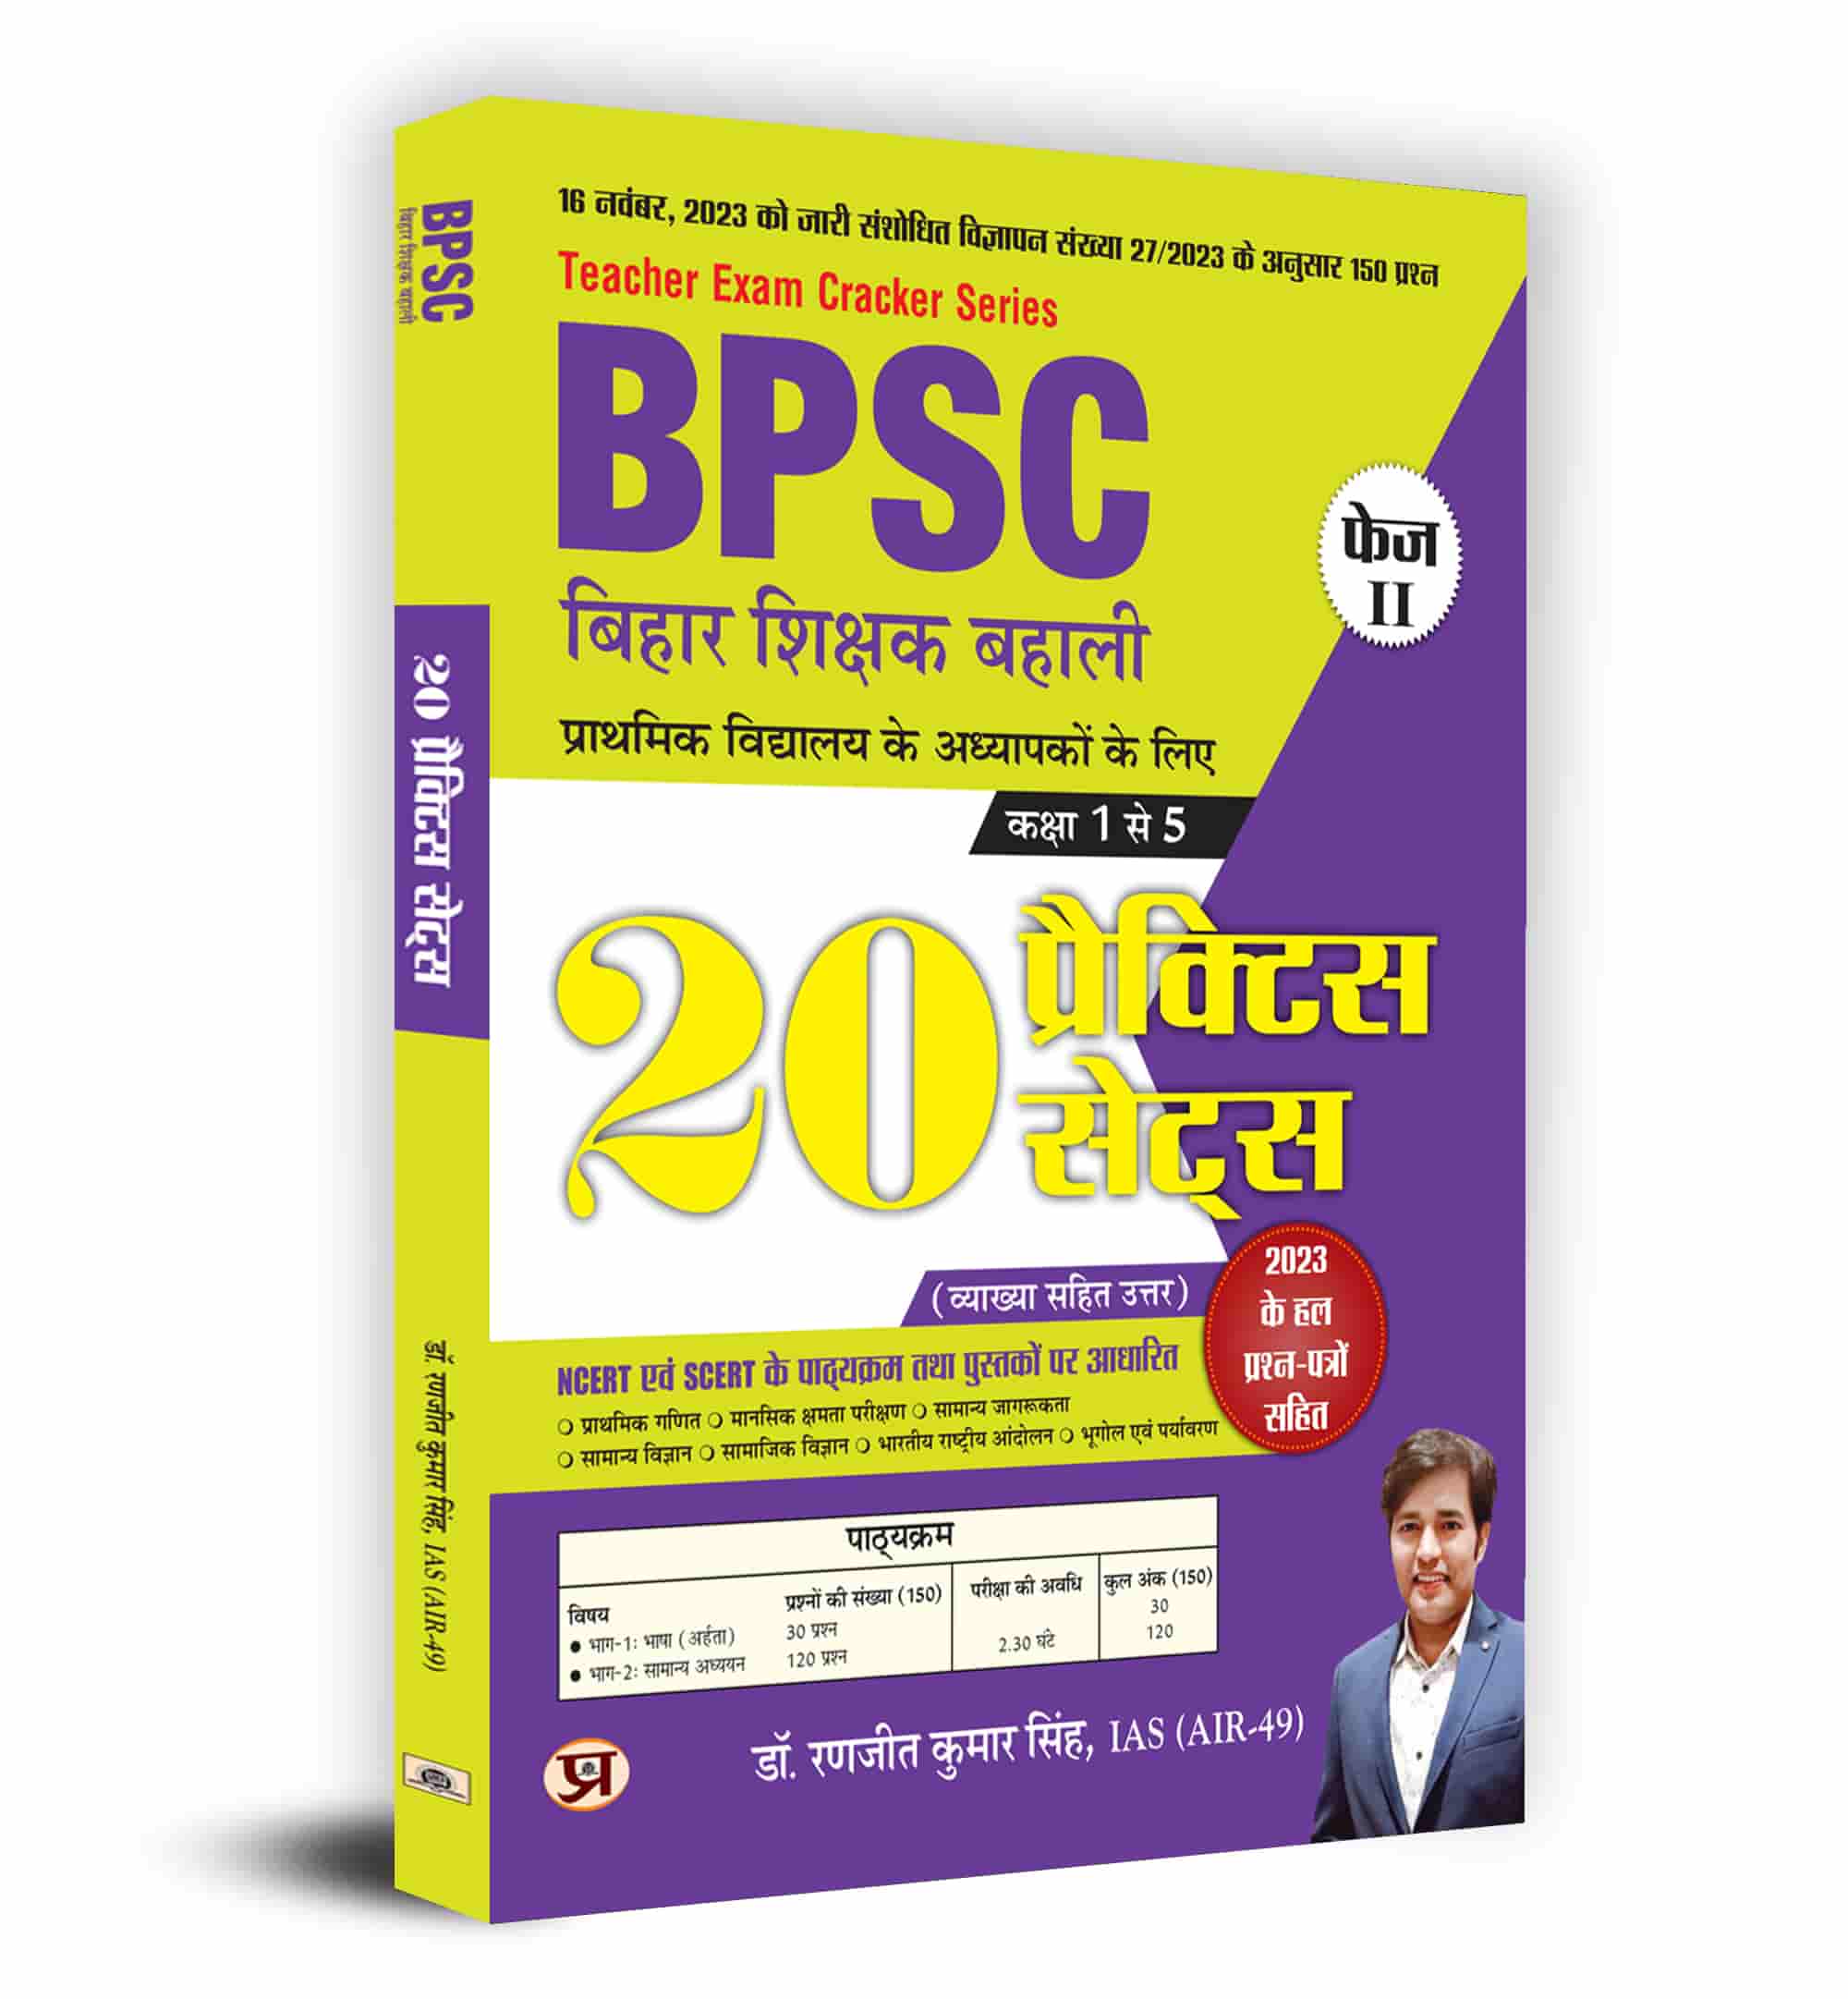 BPSC Bihar Primary School Teacher Recruitment Class 1 To 5 (20 Practice Sets) in Hindi | Based on NCERT/SCERT Syllabus